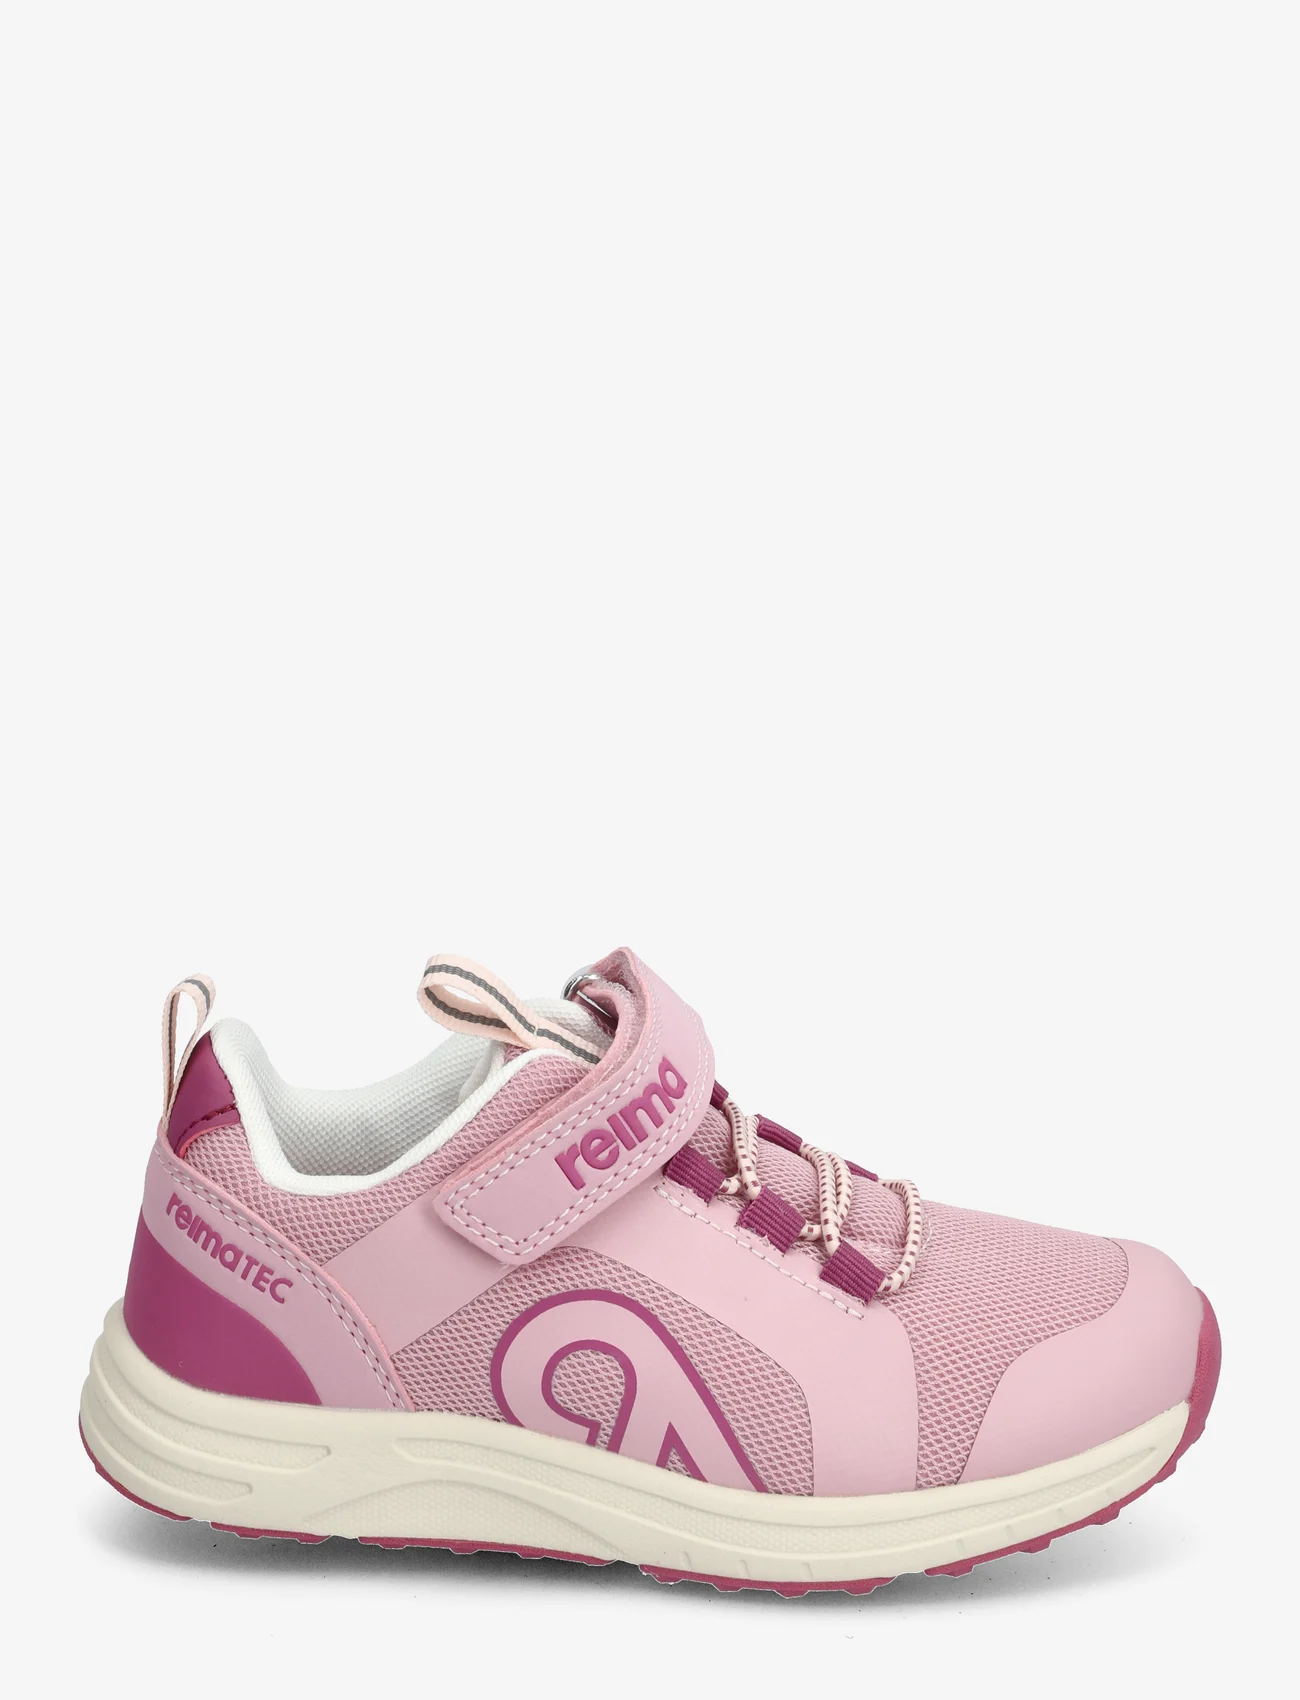 Reima - Reimatec shoes, Enkka - kids - grey pink - 1